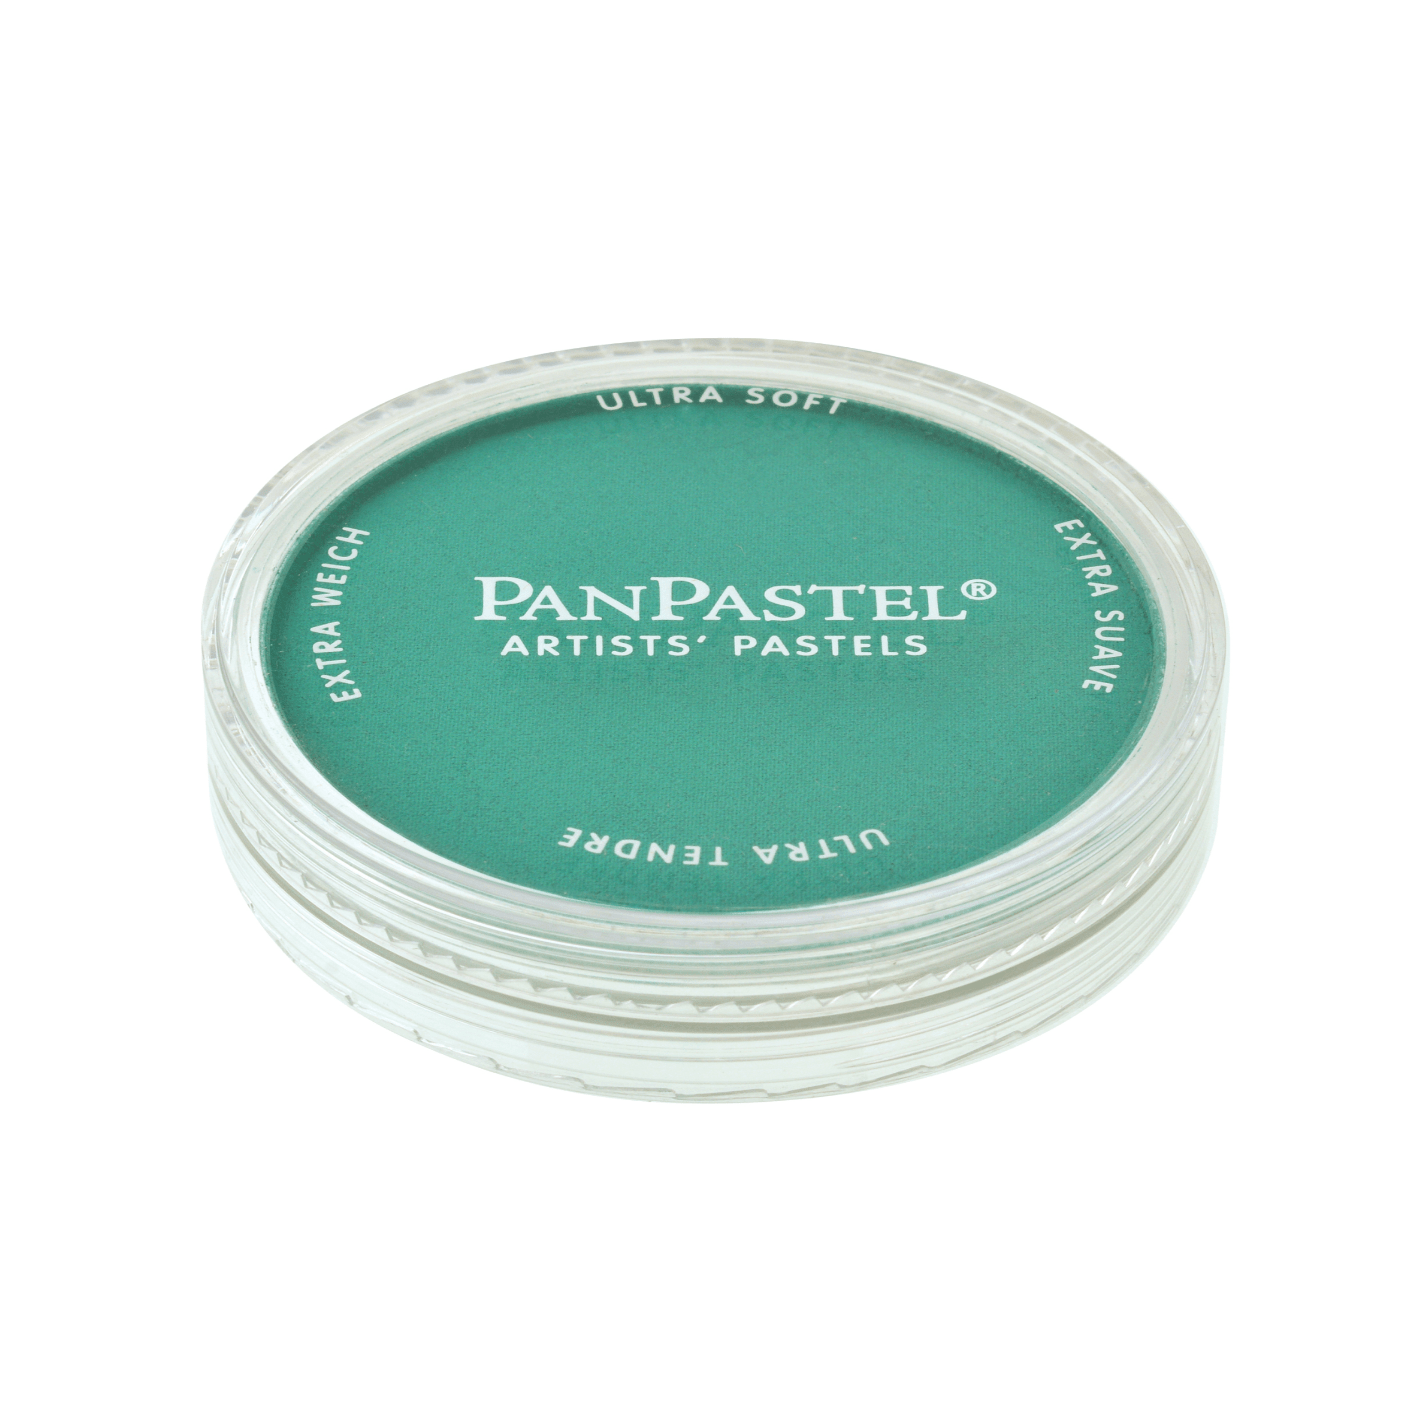 Panpastel Tørpastel 9ml Phthalo Green 620.5